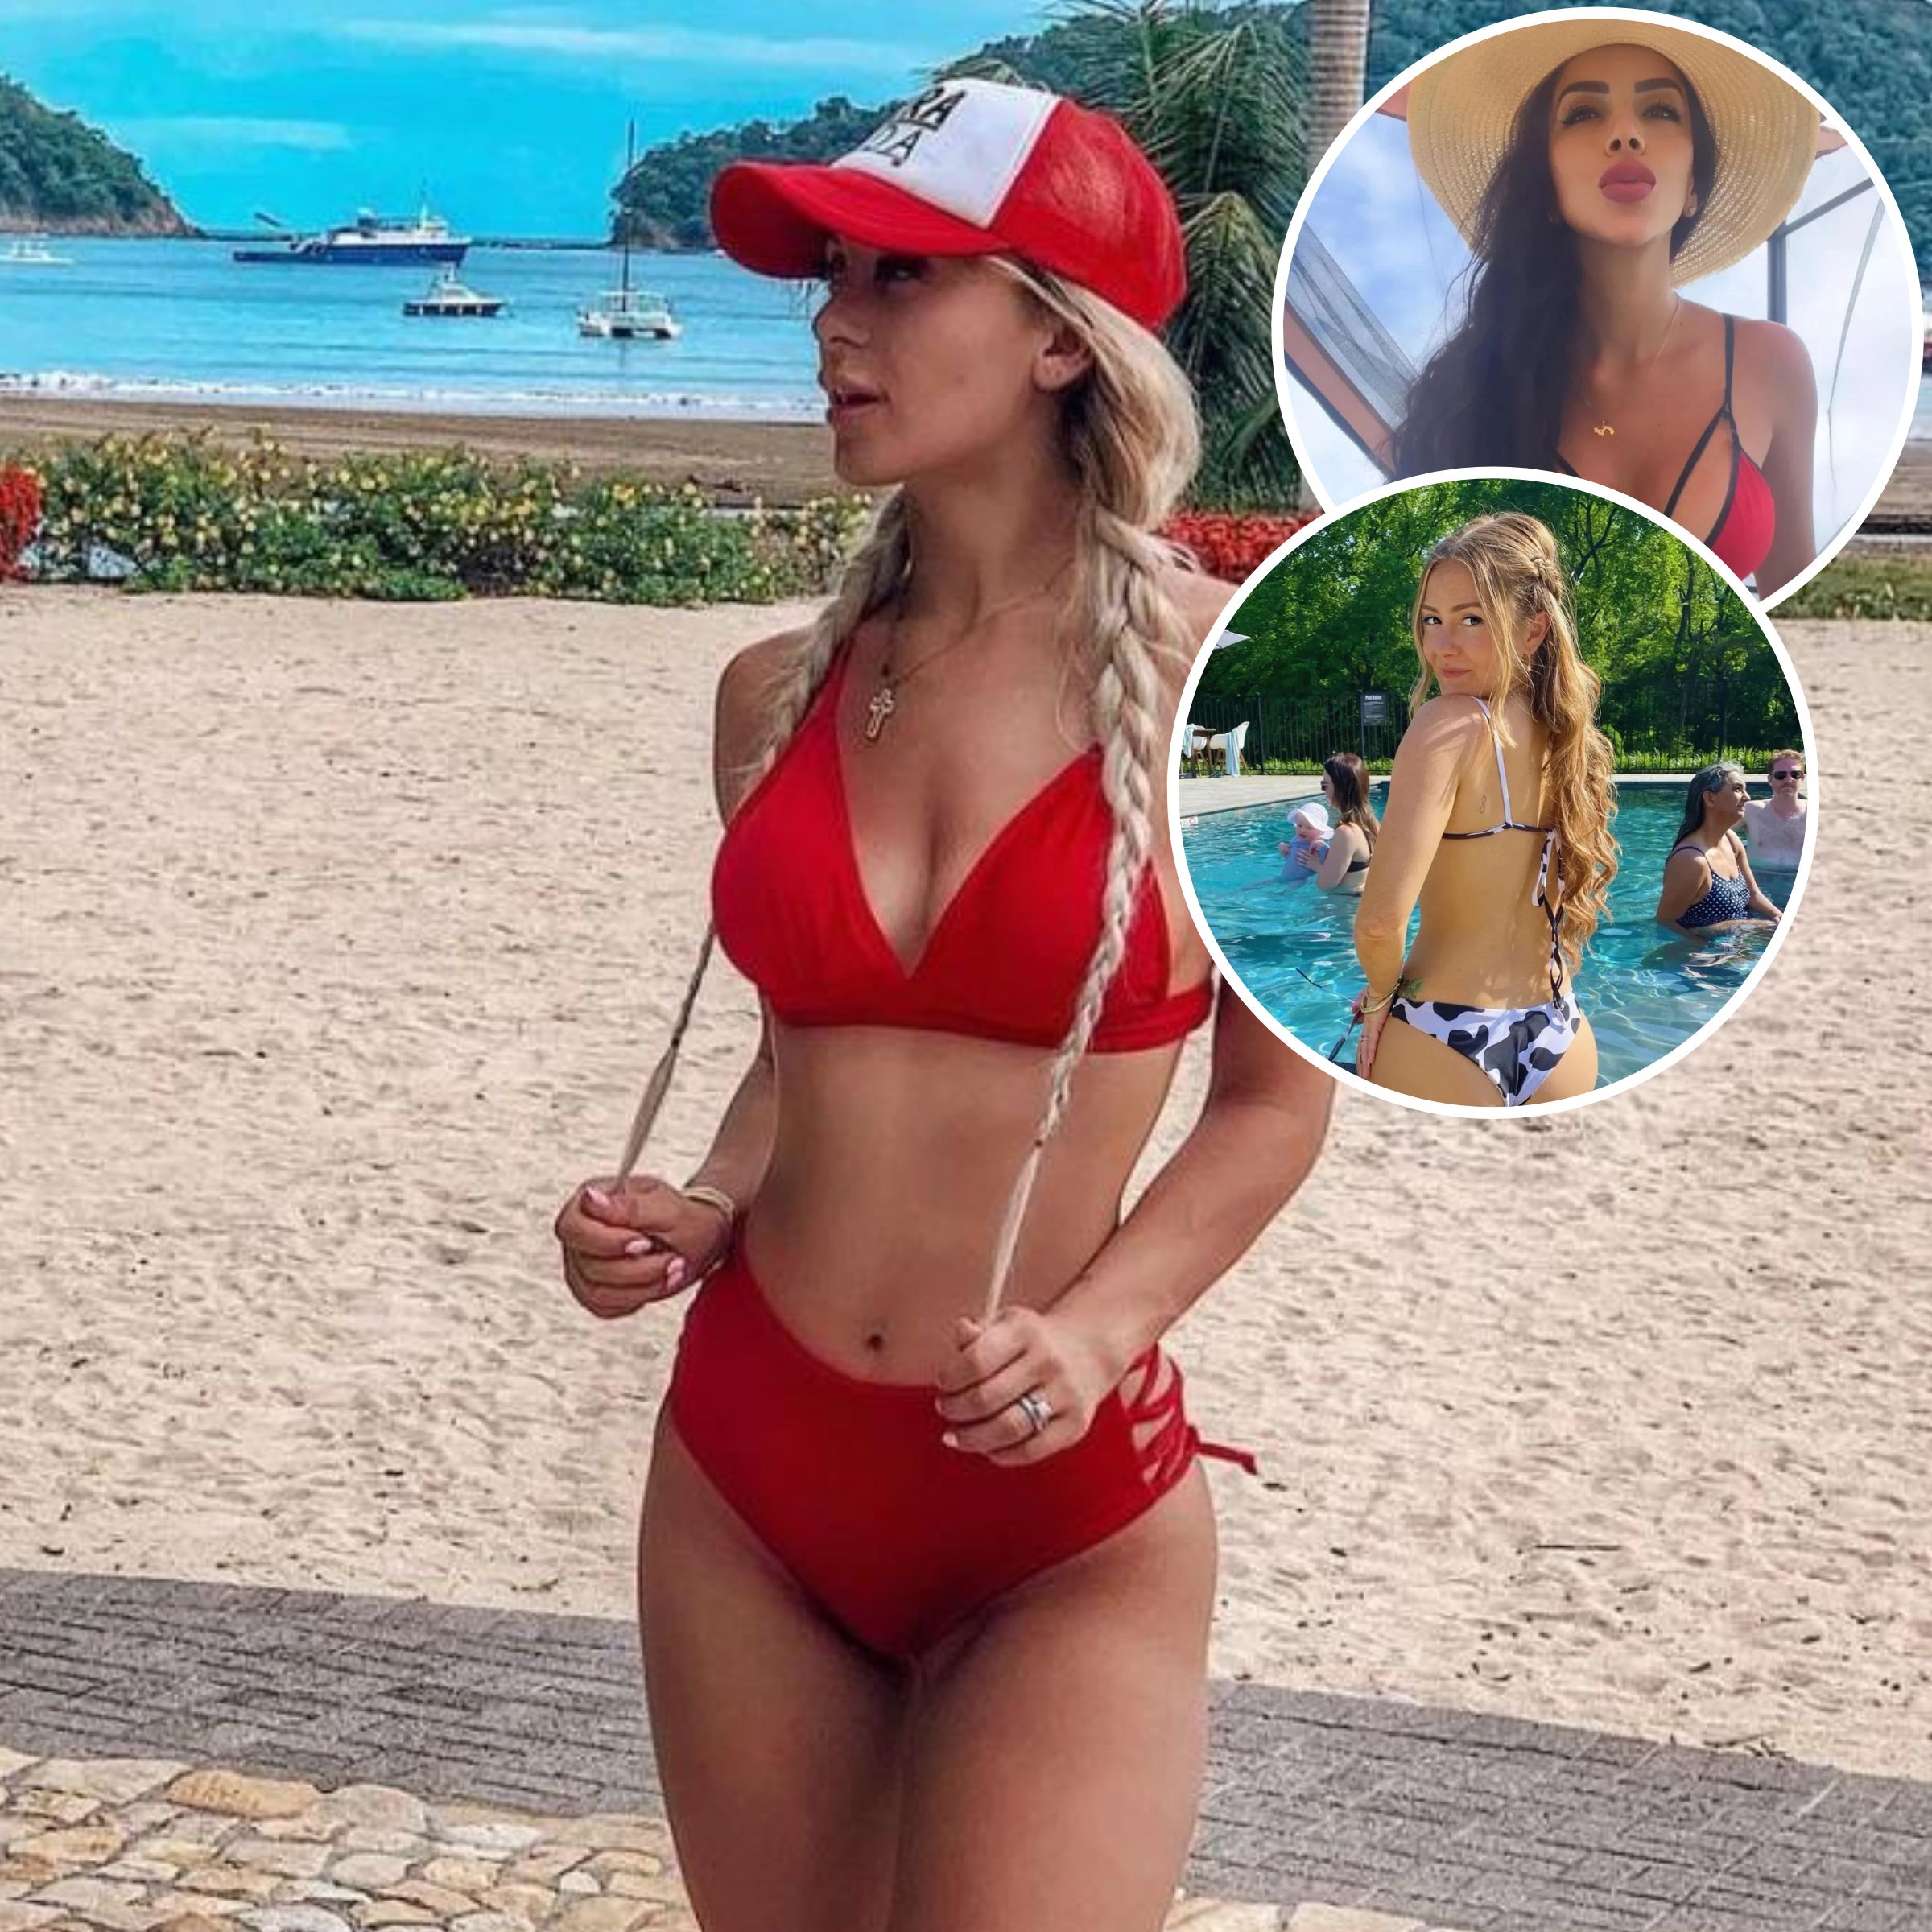 Brazilian Porn Actress Blue Bikini - 90 Day Fiance' Bikini Photos: See the Stars Rocking Sexy Swimsuits